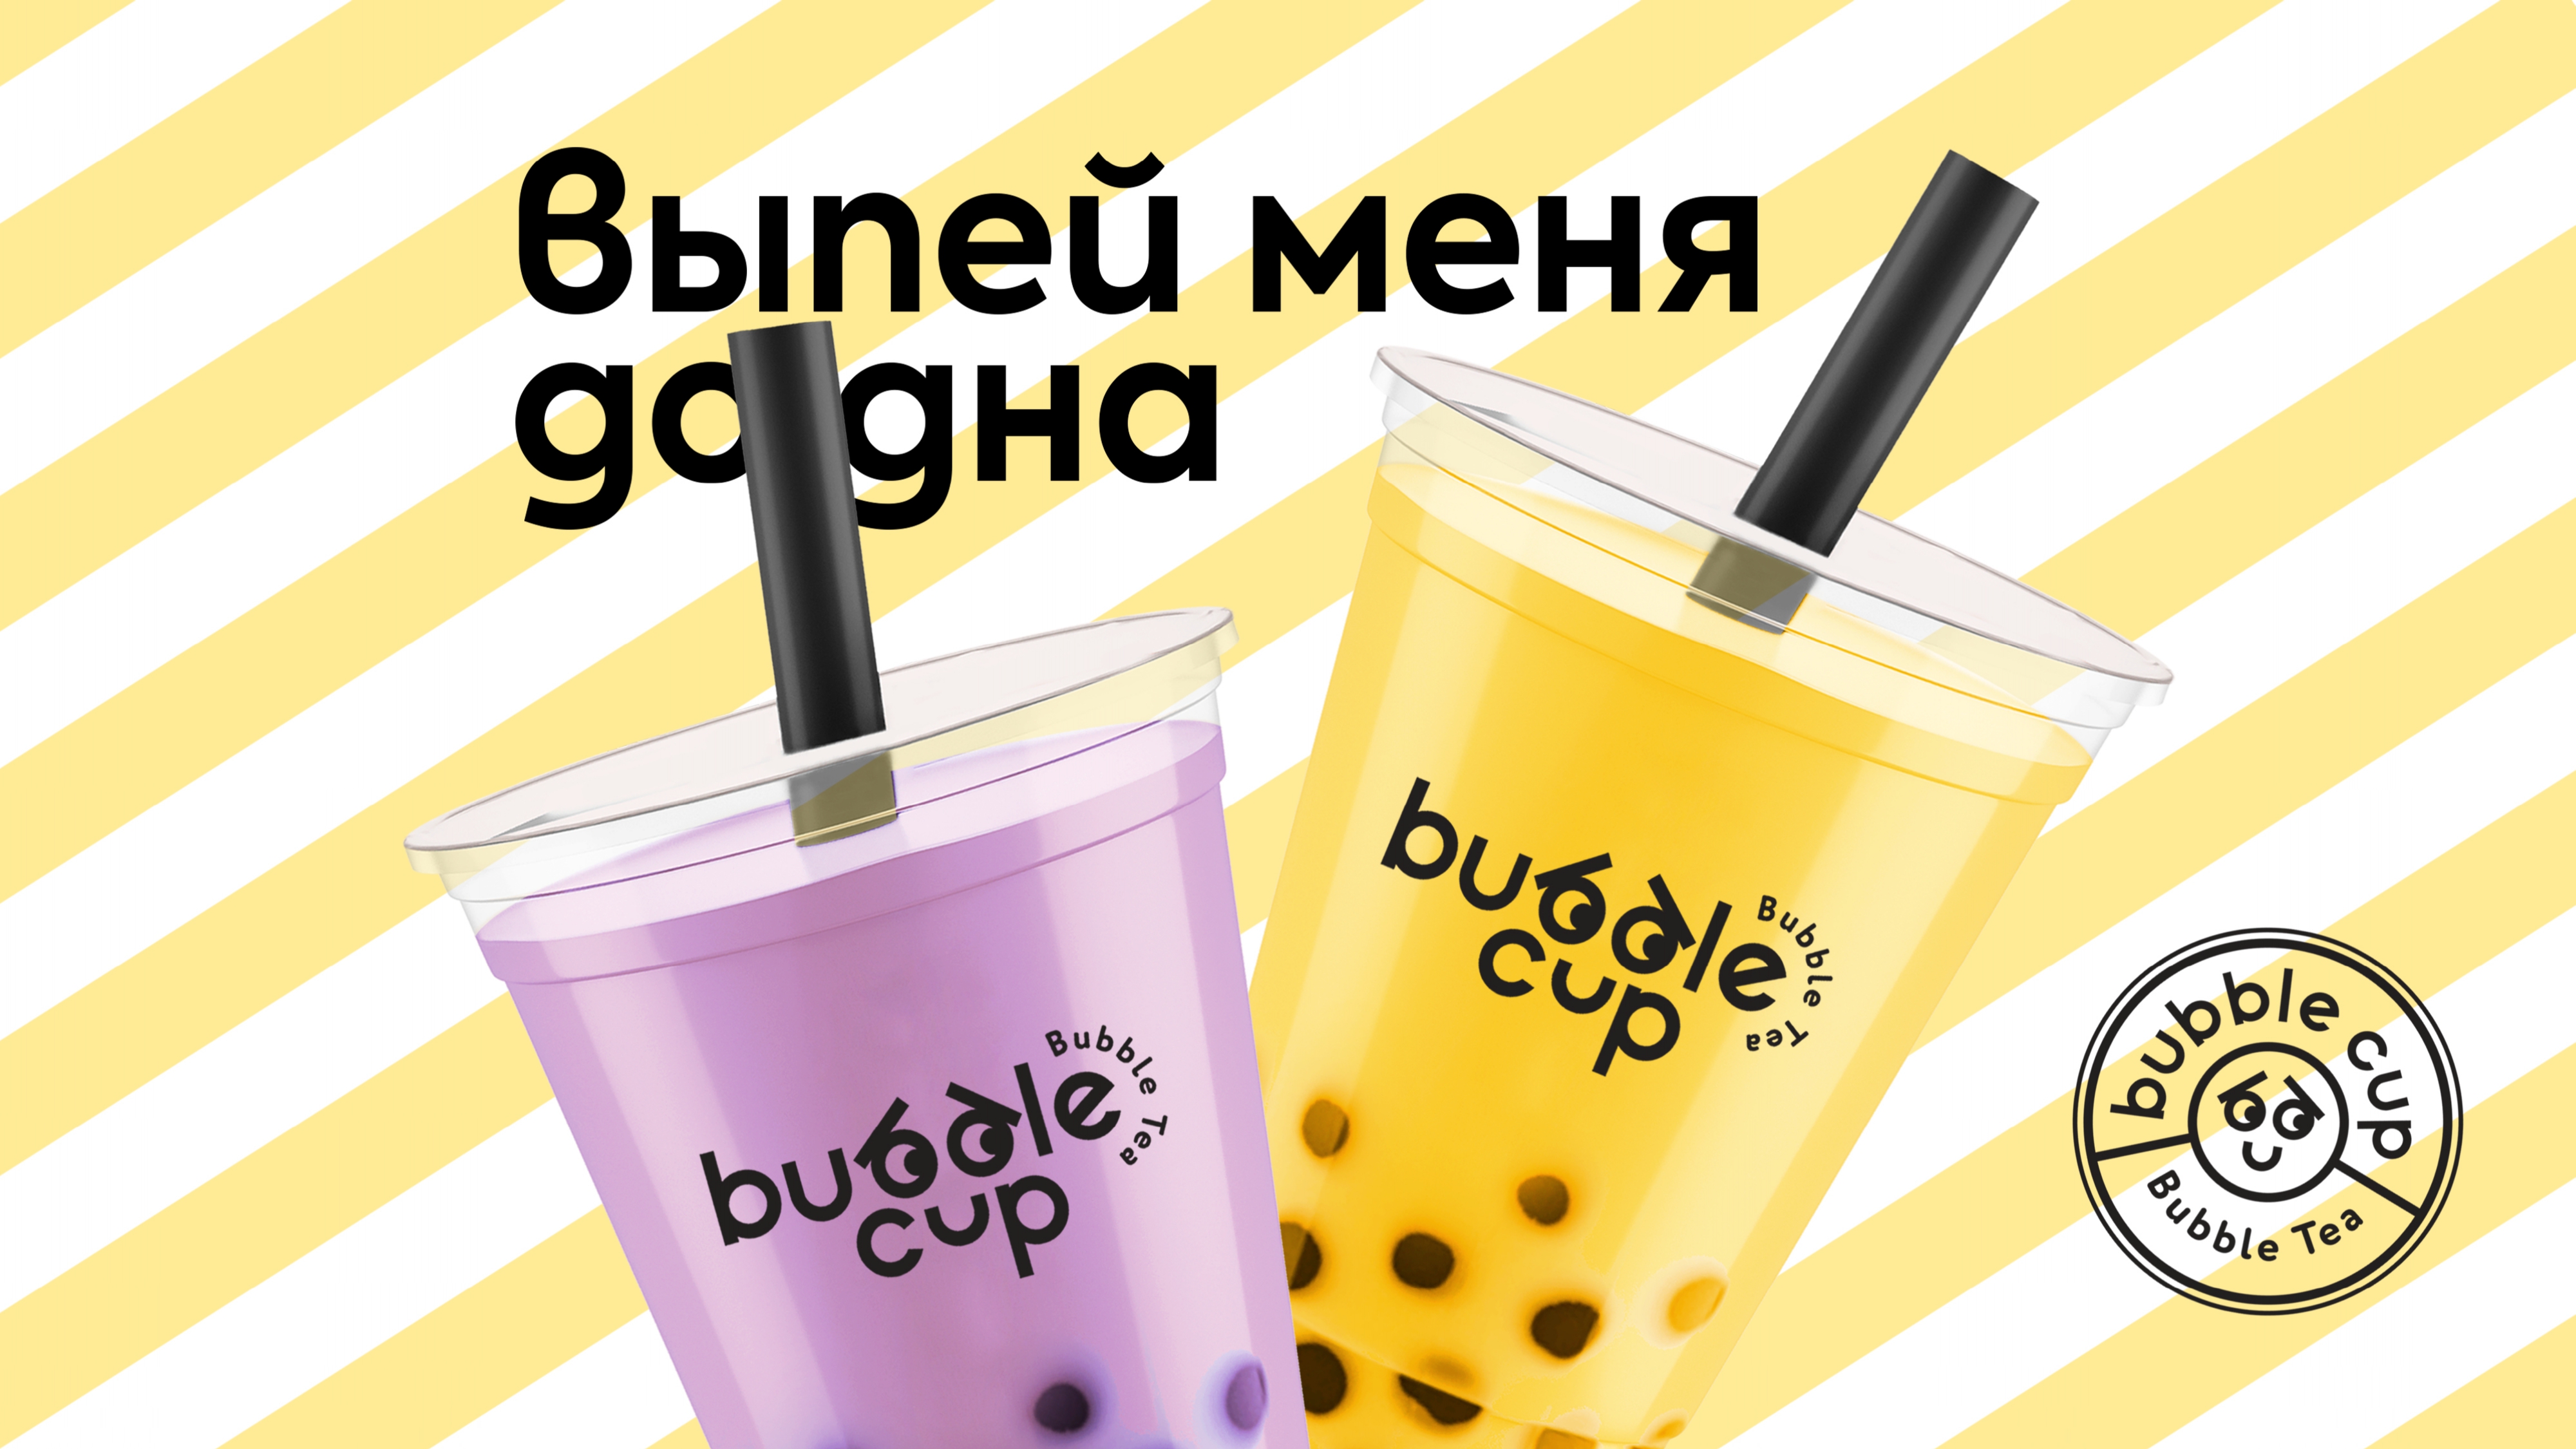 Bubble Cup Branding